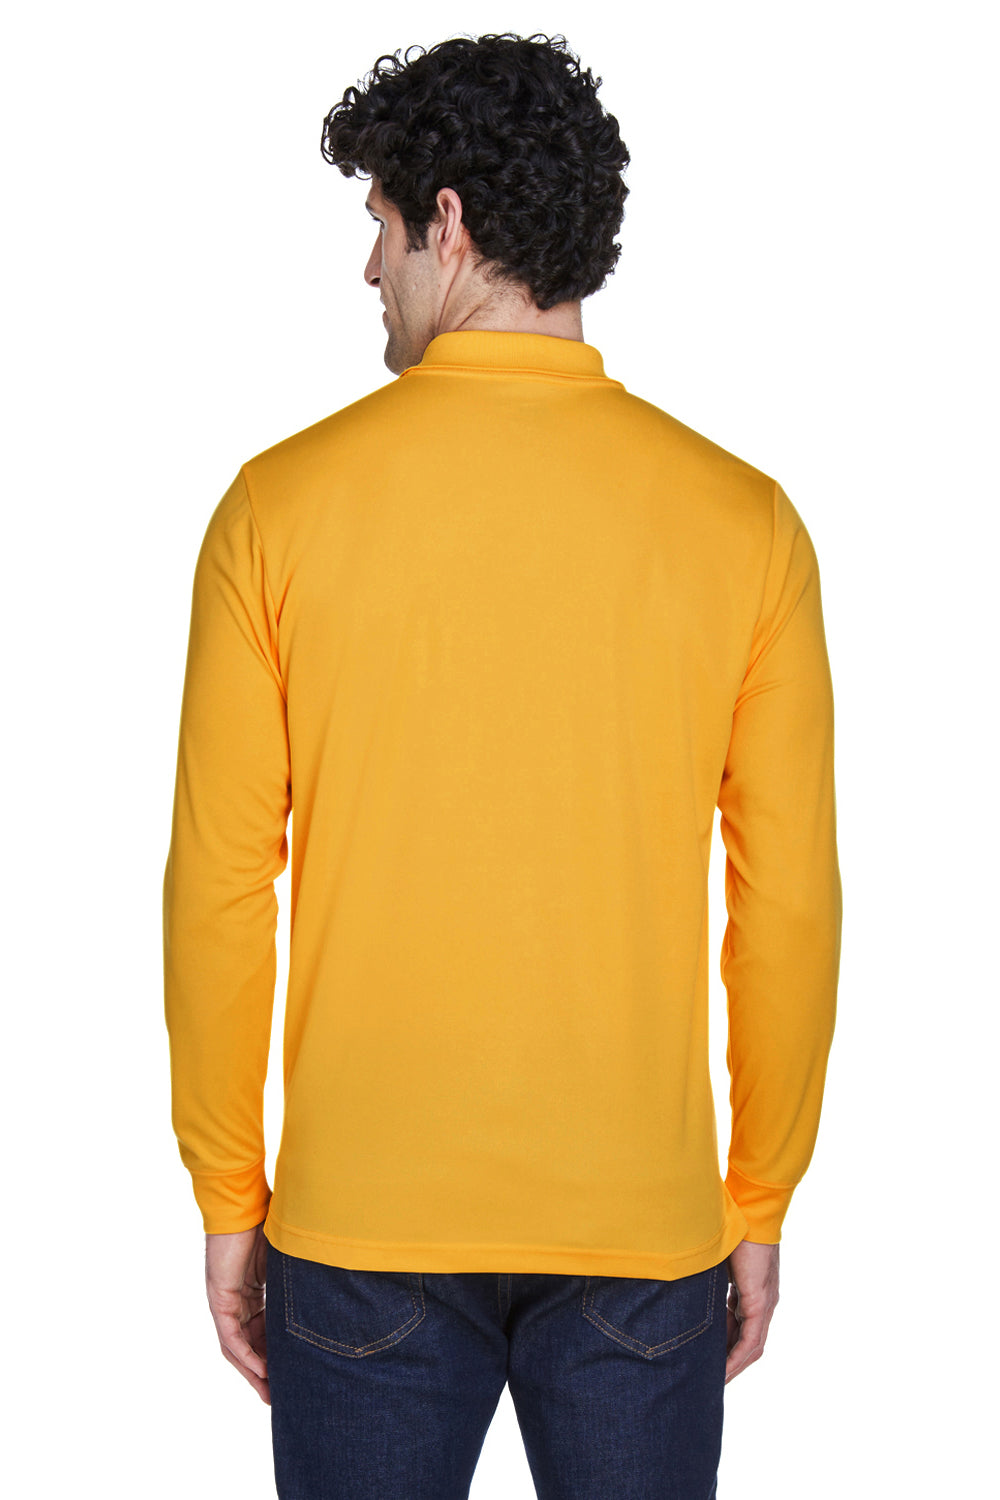 Core 365 88192 Mens Pinnacle Performance Moisture Wicking Long Sleeve Polo Shirt Gold Back